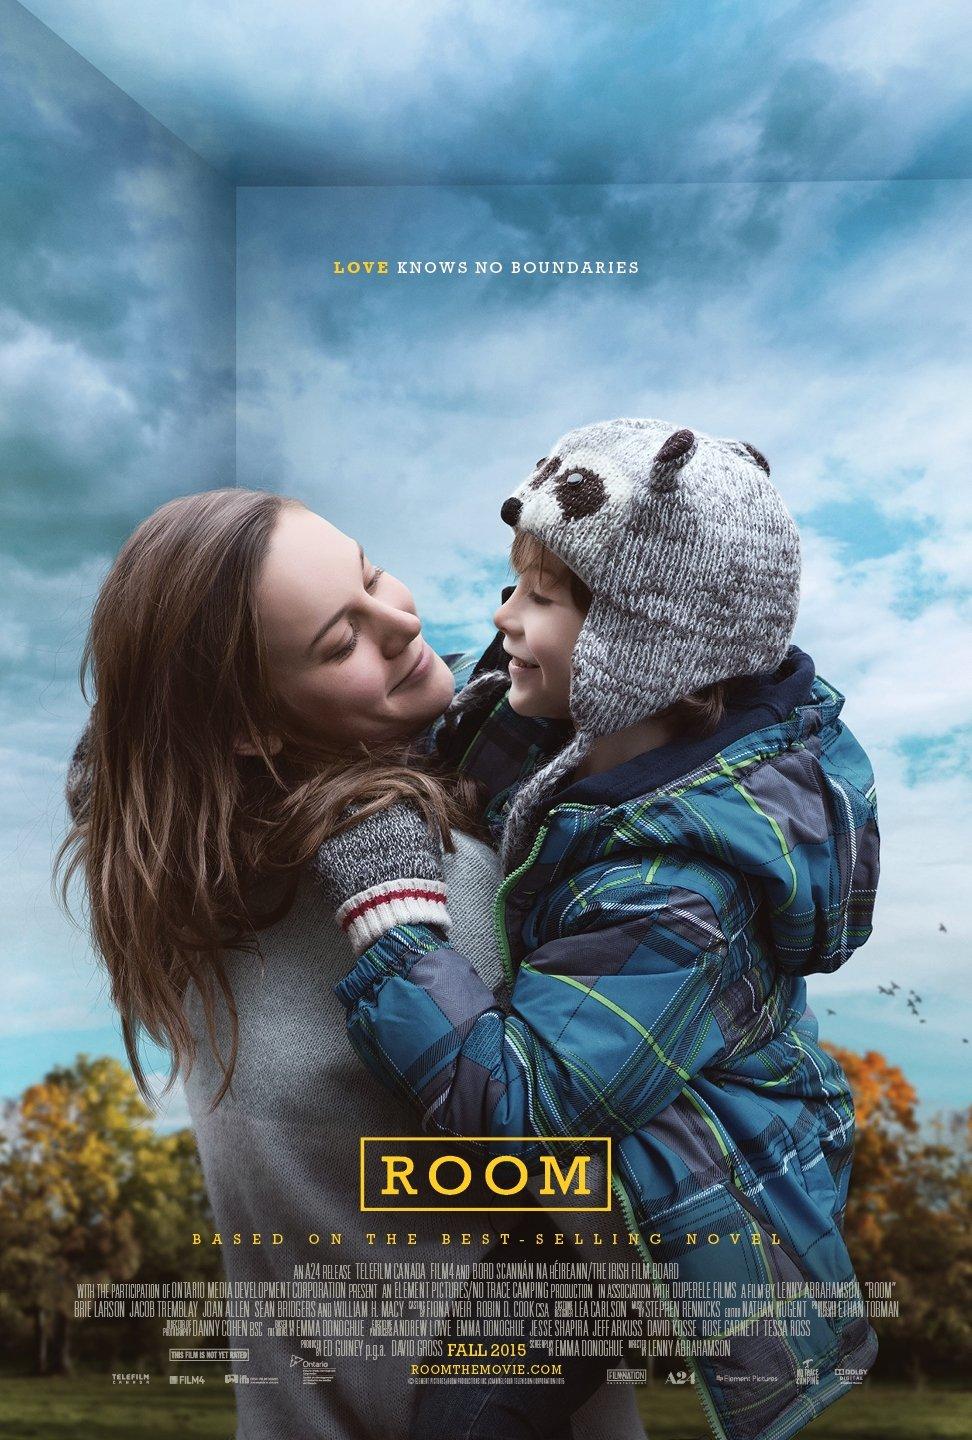 Poster phim Room. (Ảnh: internet)